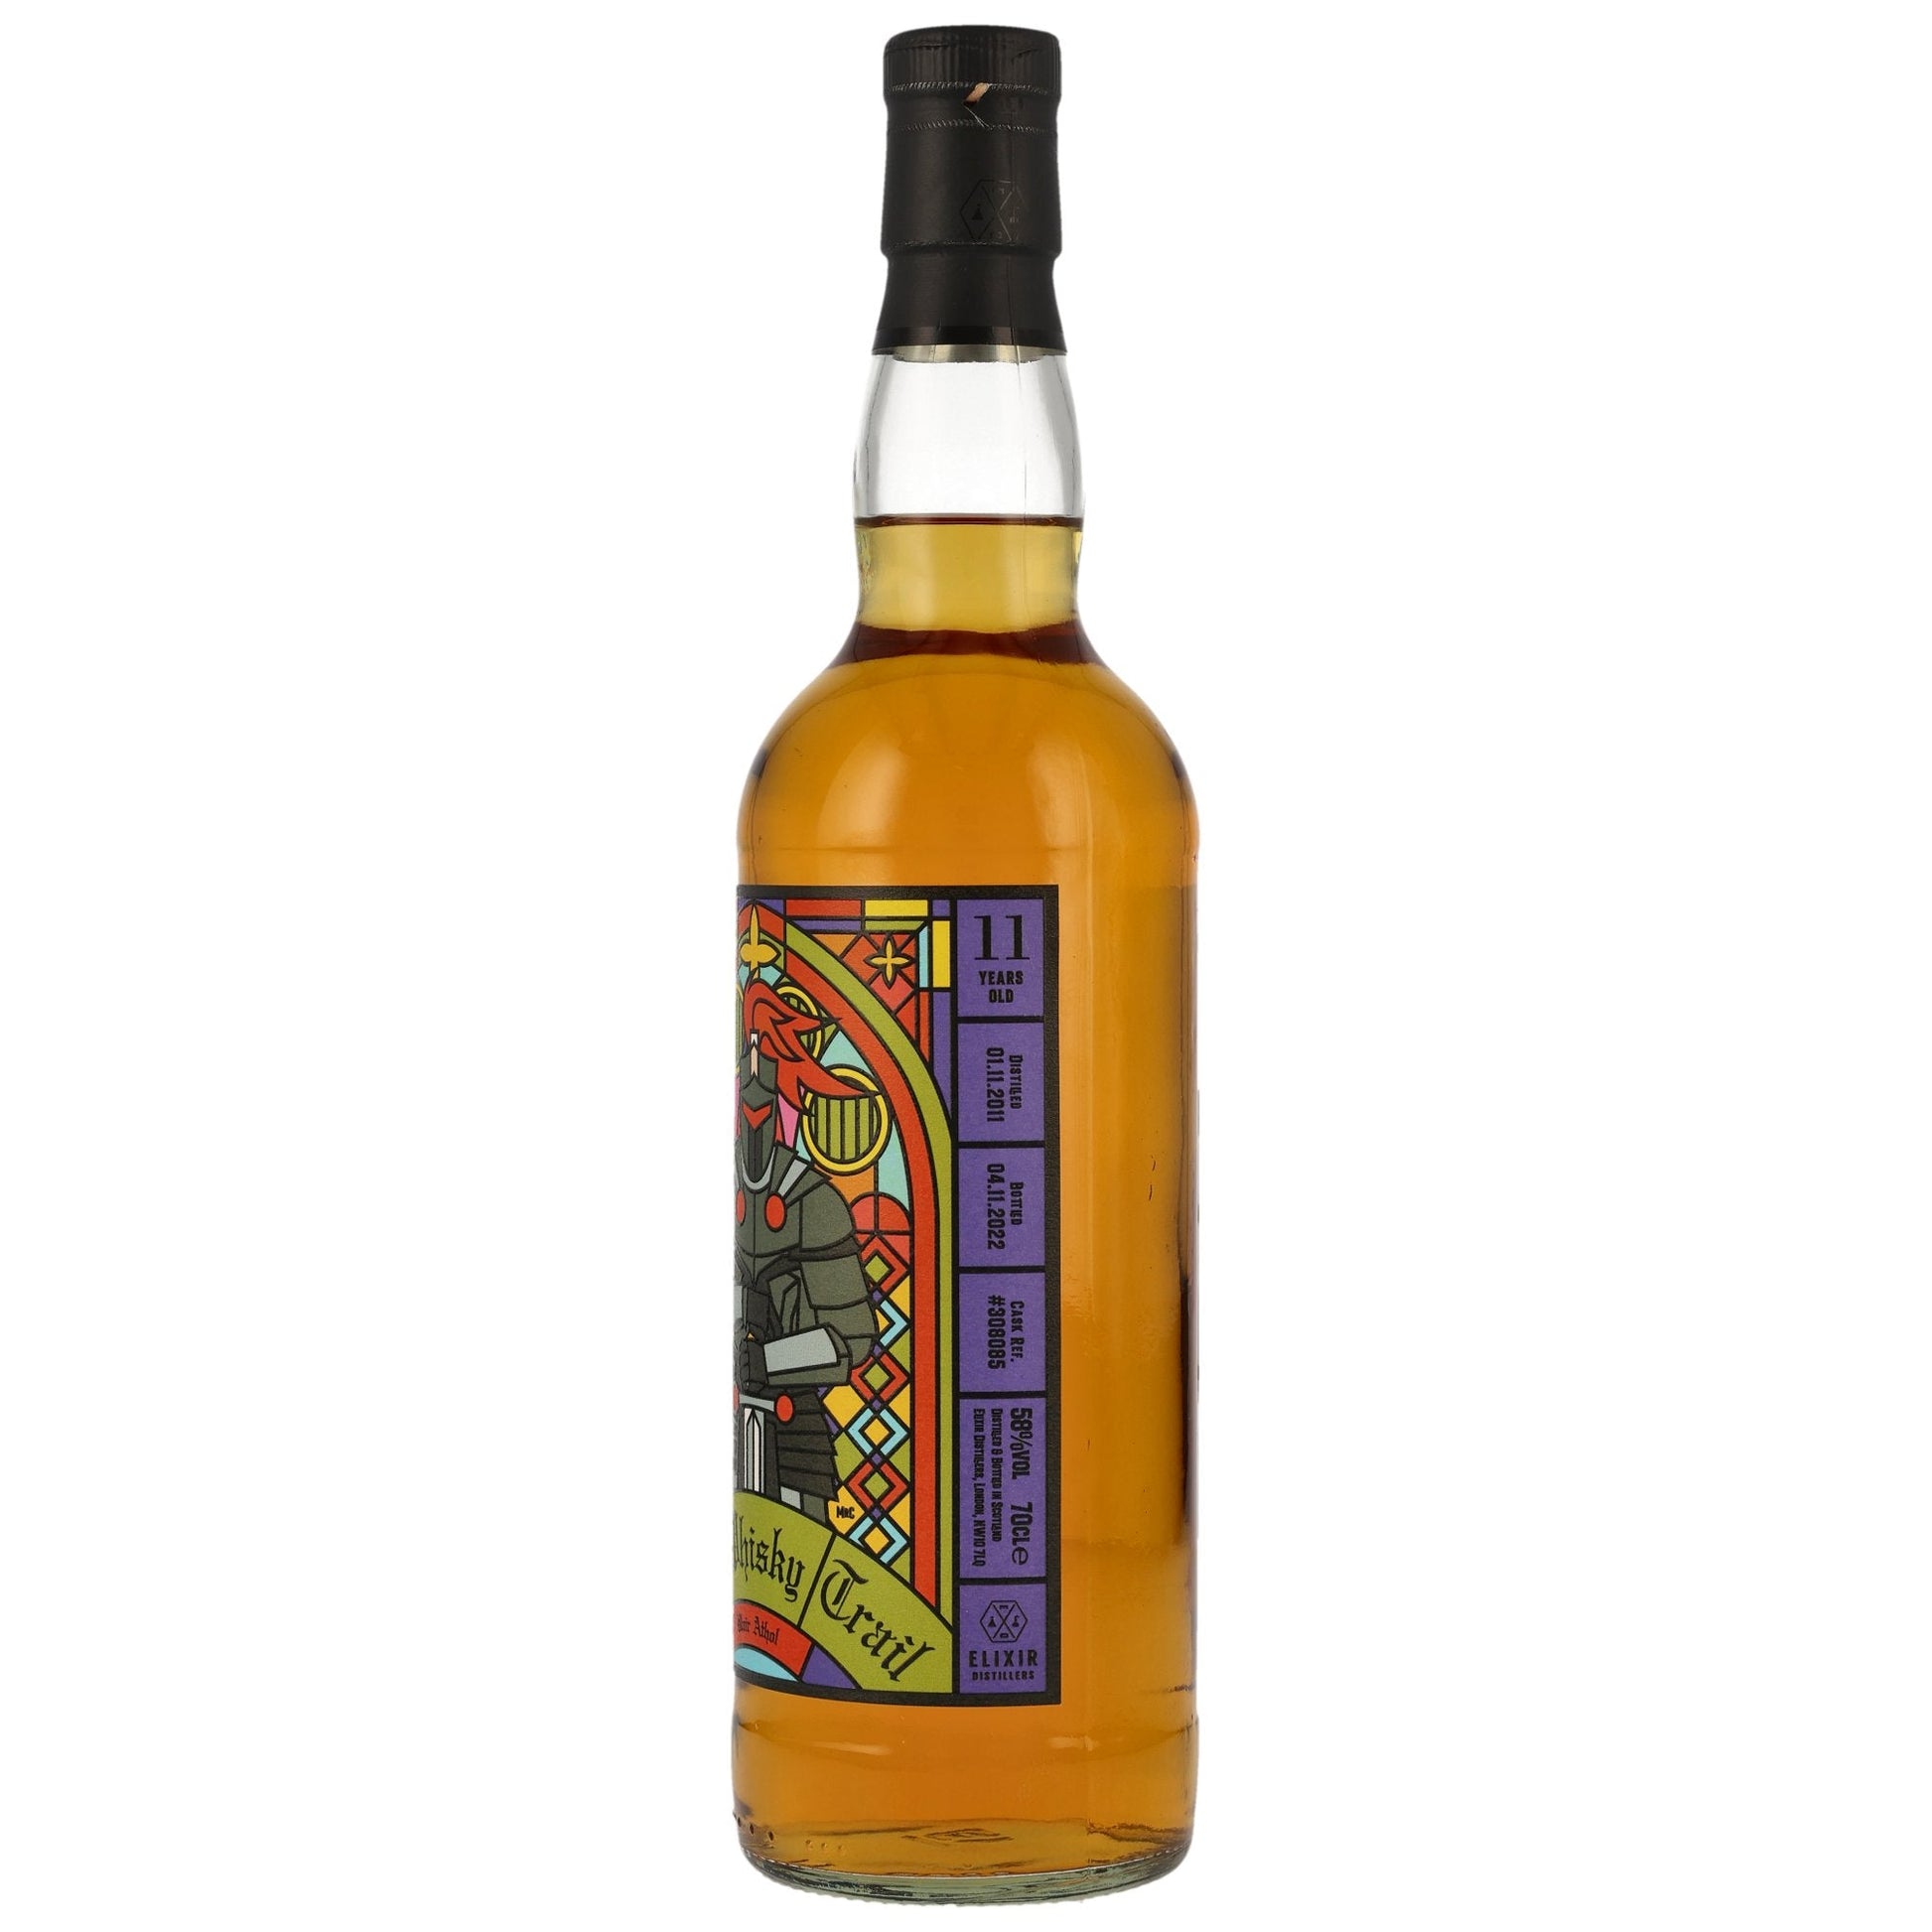 Blair Athol | The Whisky Trail Knights | 11 Jahre | Bourbon #308085 | 2011/2022 | 58%GET A BOTTLE